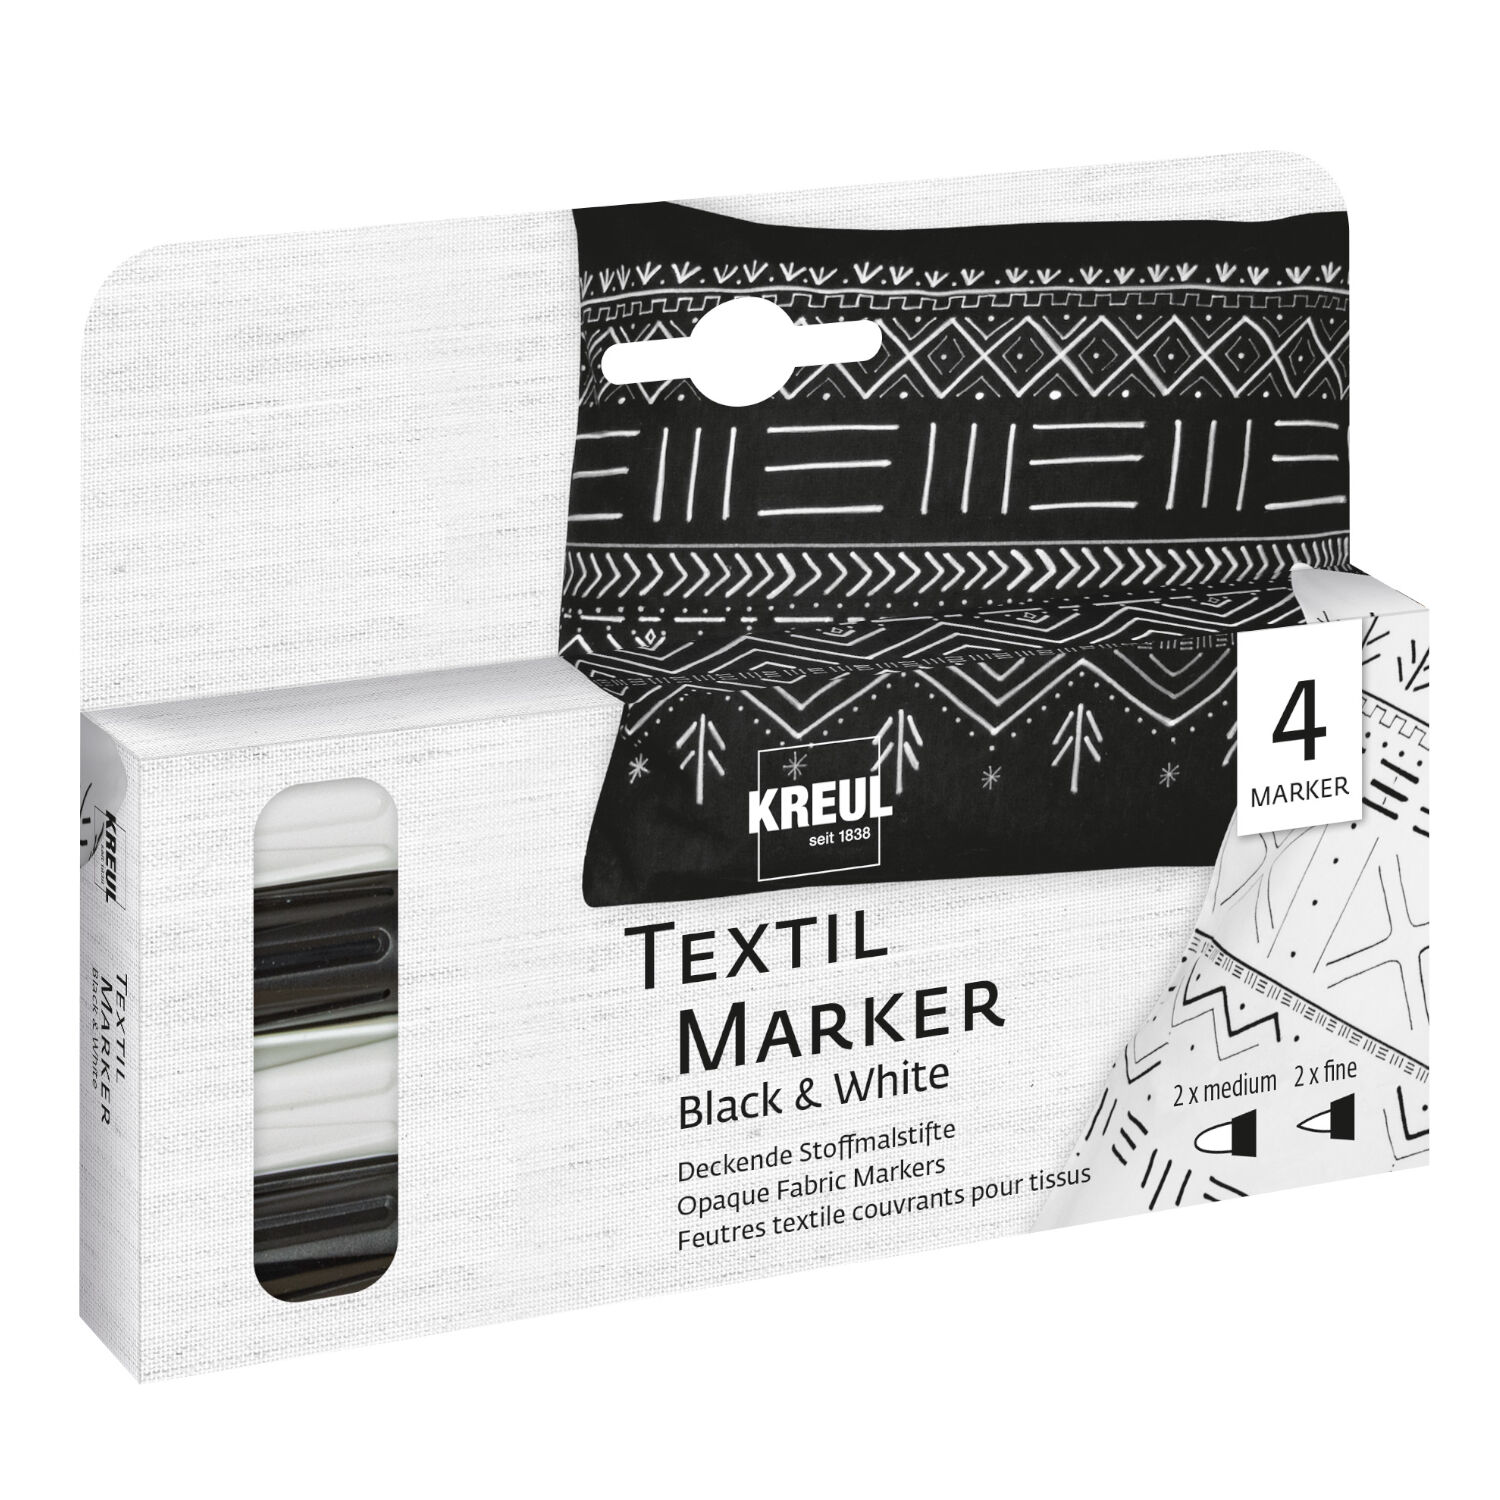 NEU Textil-Marker-Set Opak Black & White, 4 Stück